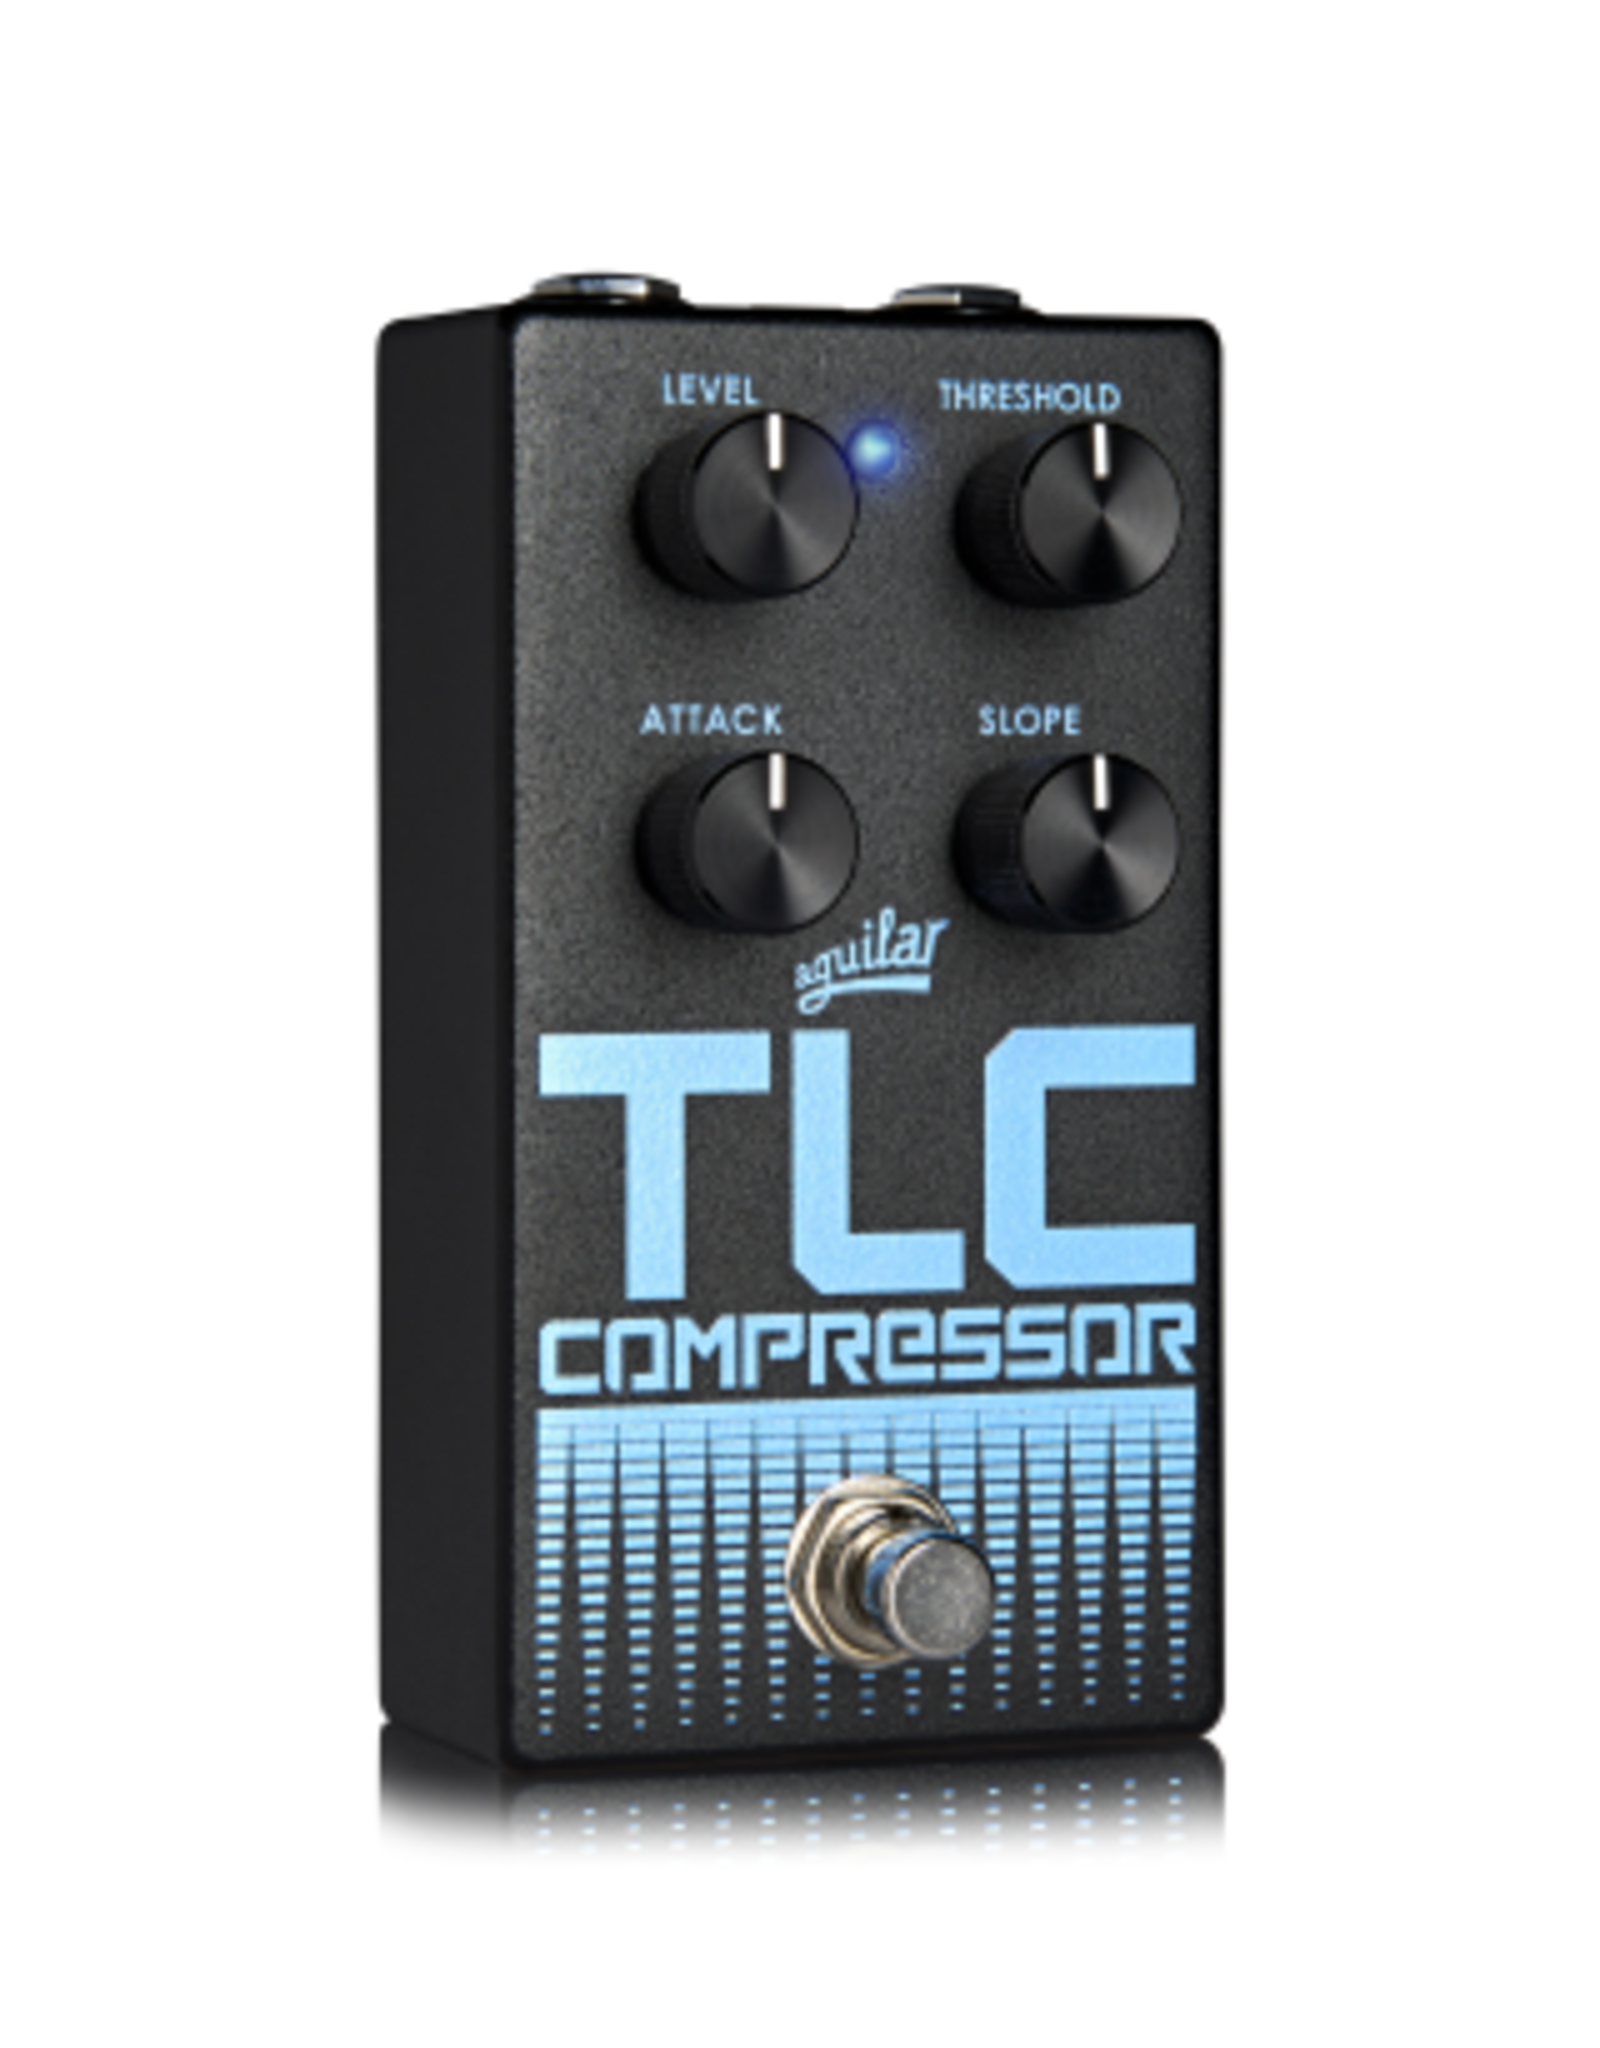 Aguilar Aguilar TLC Bass Compressor